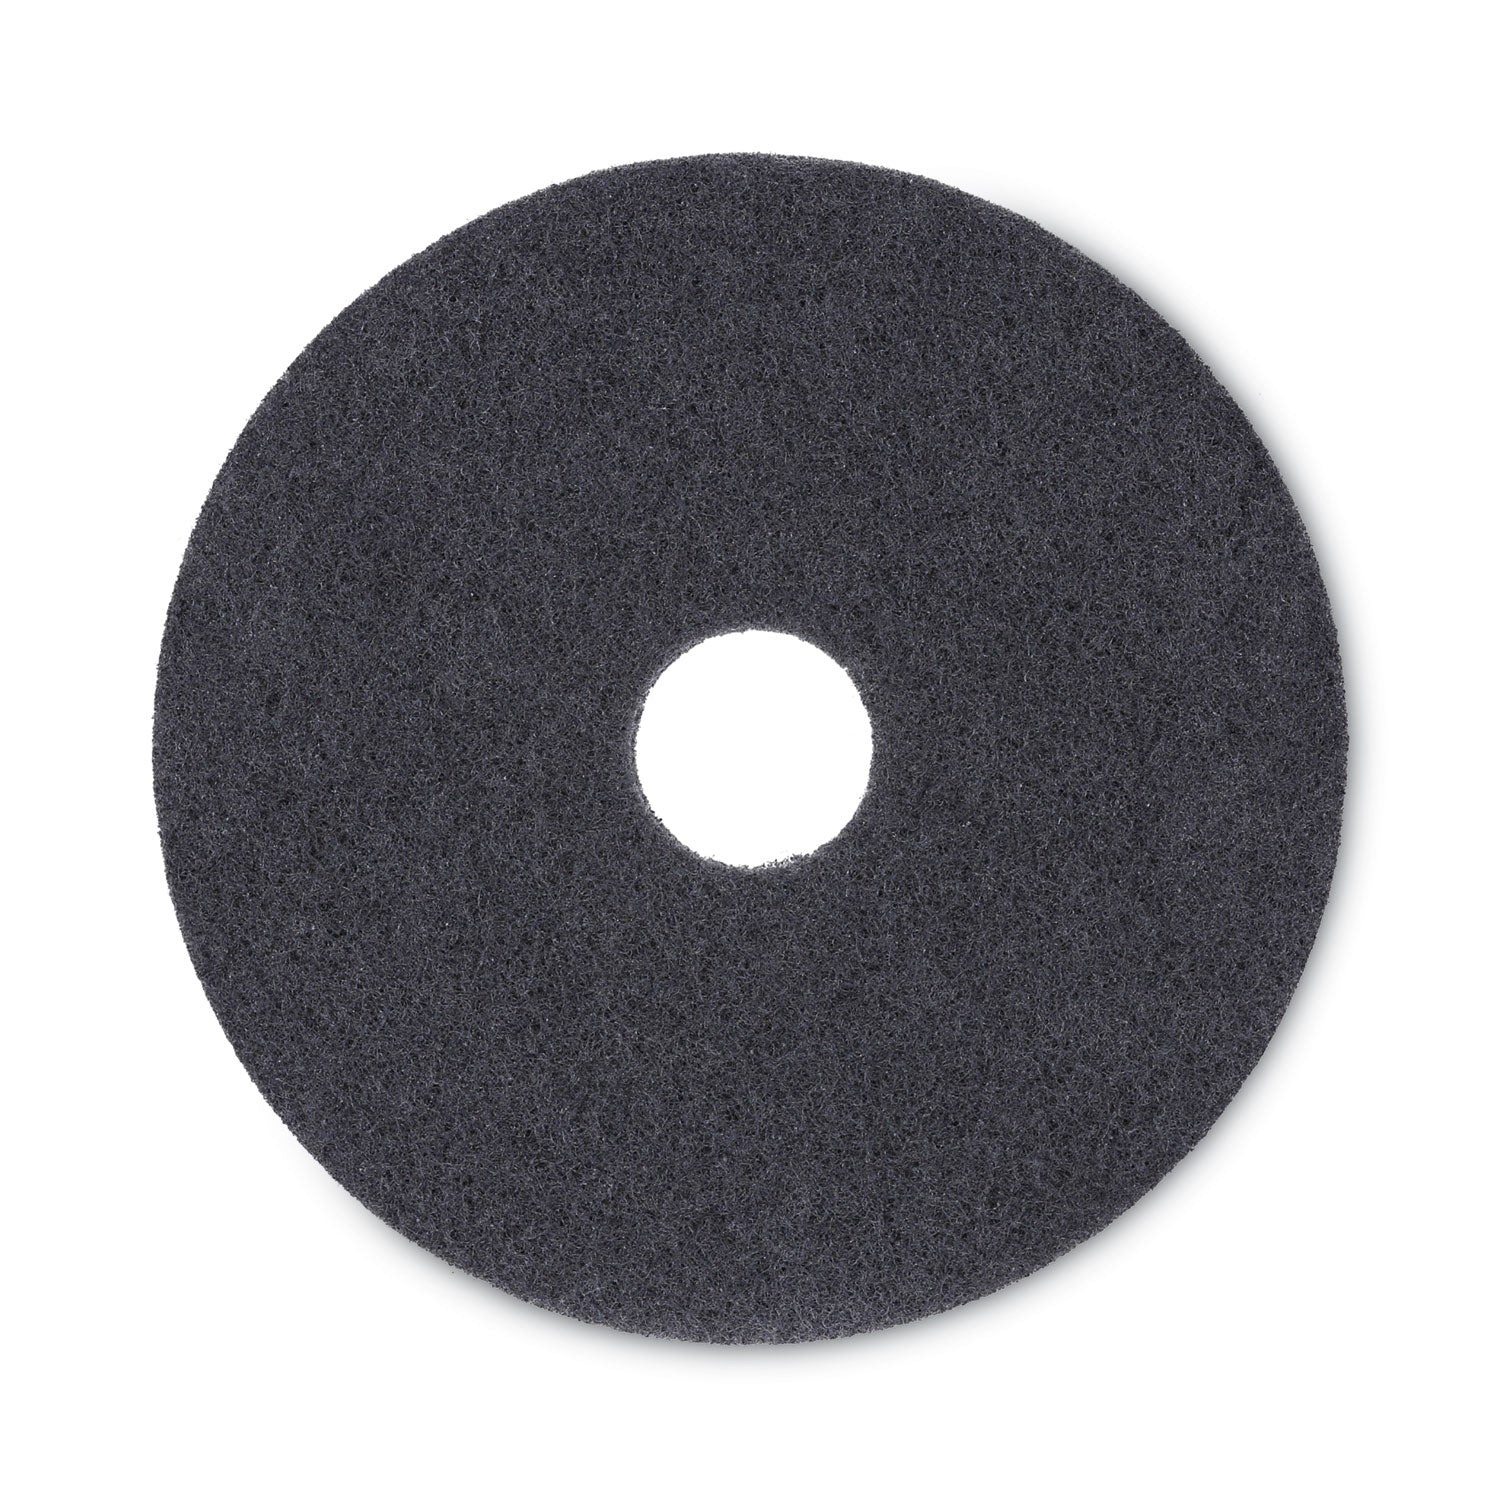 stripping-floor-pads-16-diameter-black-5-carton_bwk4016bla - 1